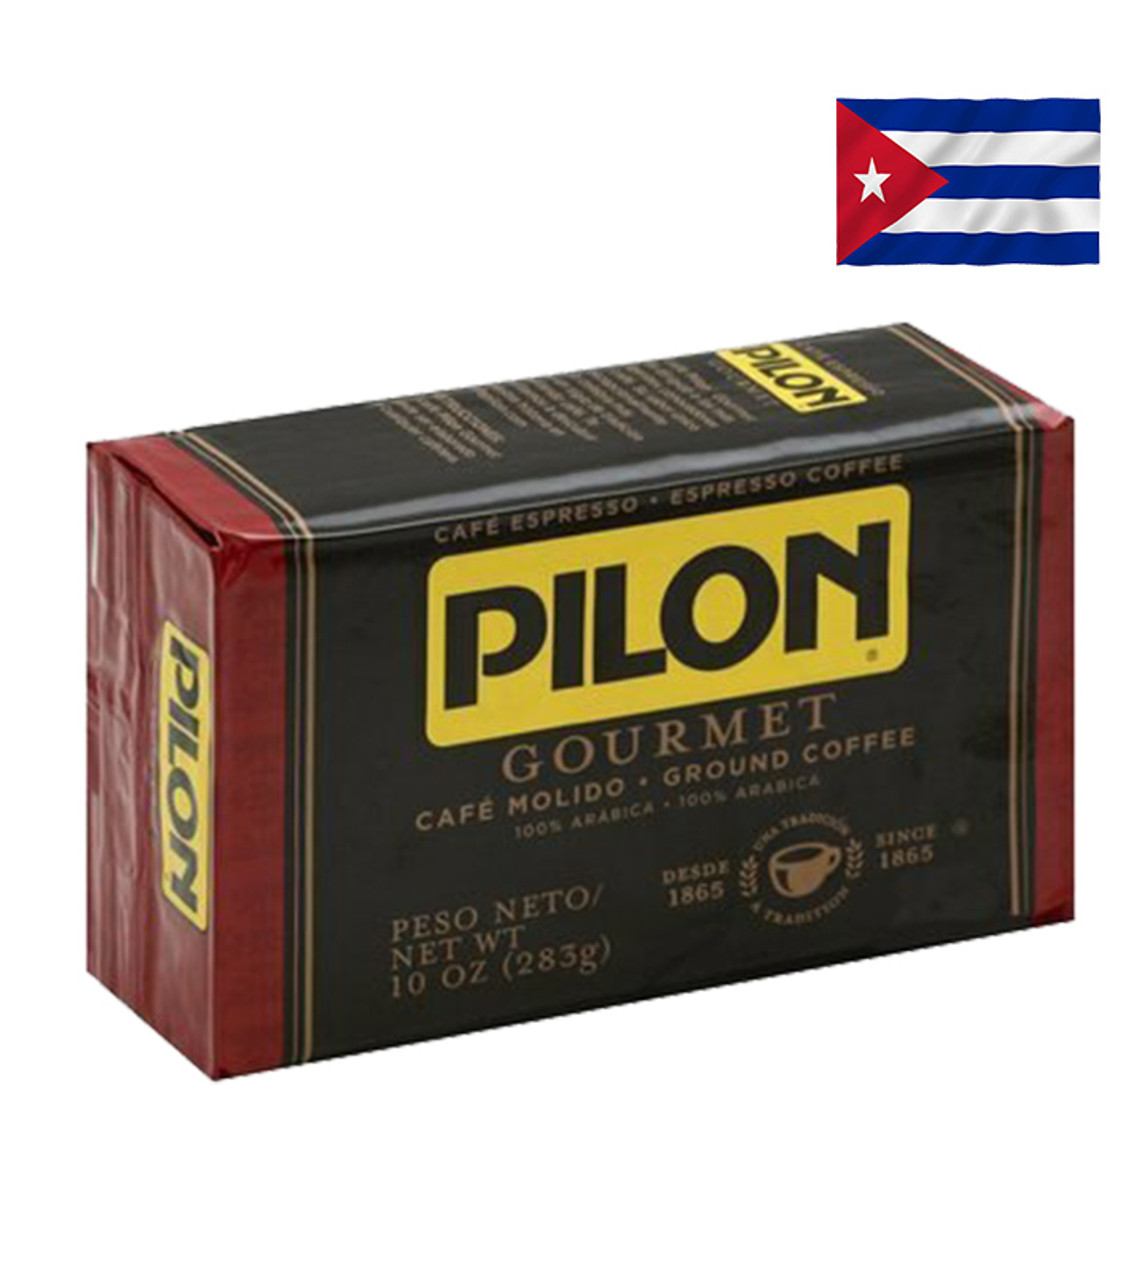 Pilon Gourmet Whole Bean Coffee, 16 oz (Pack of 8)